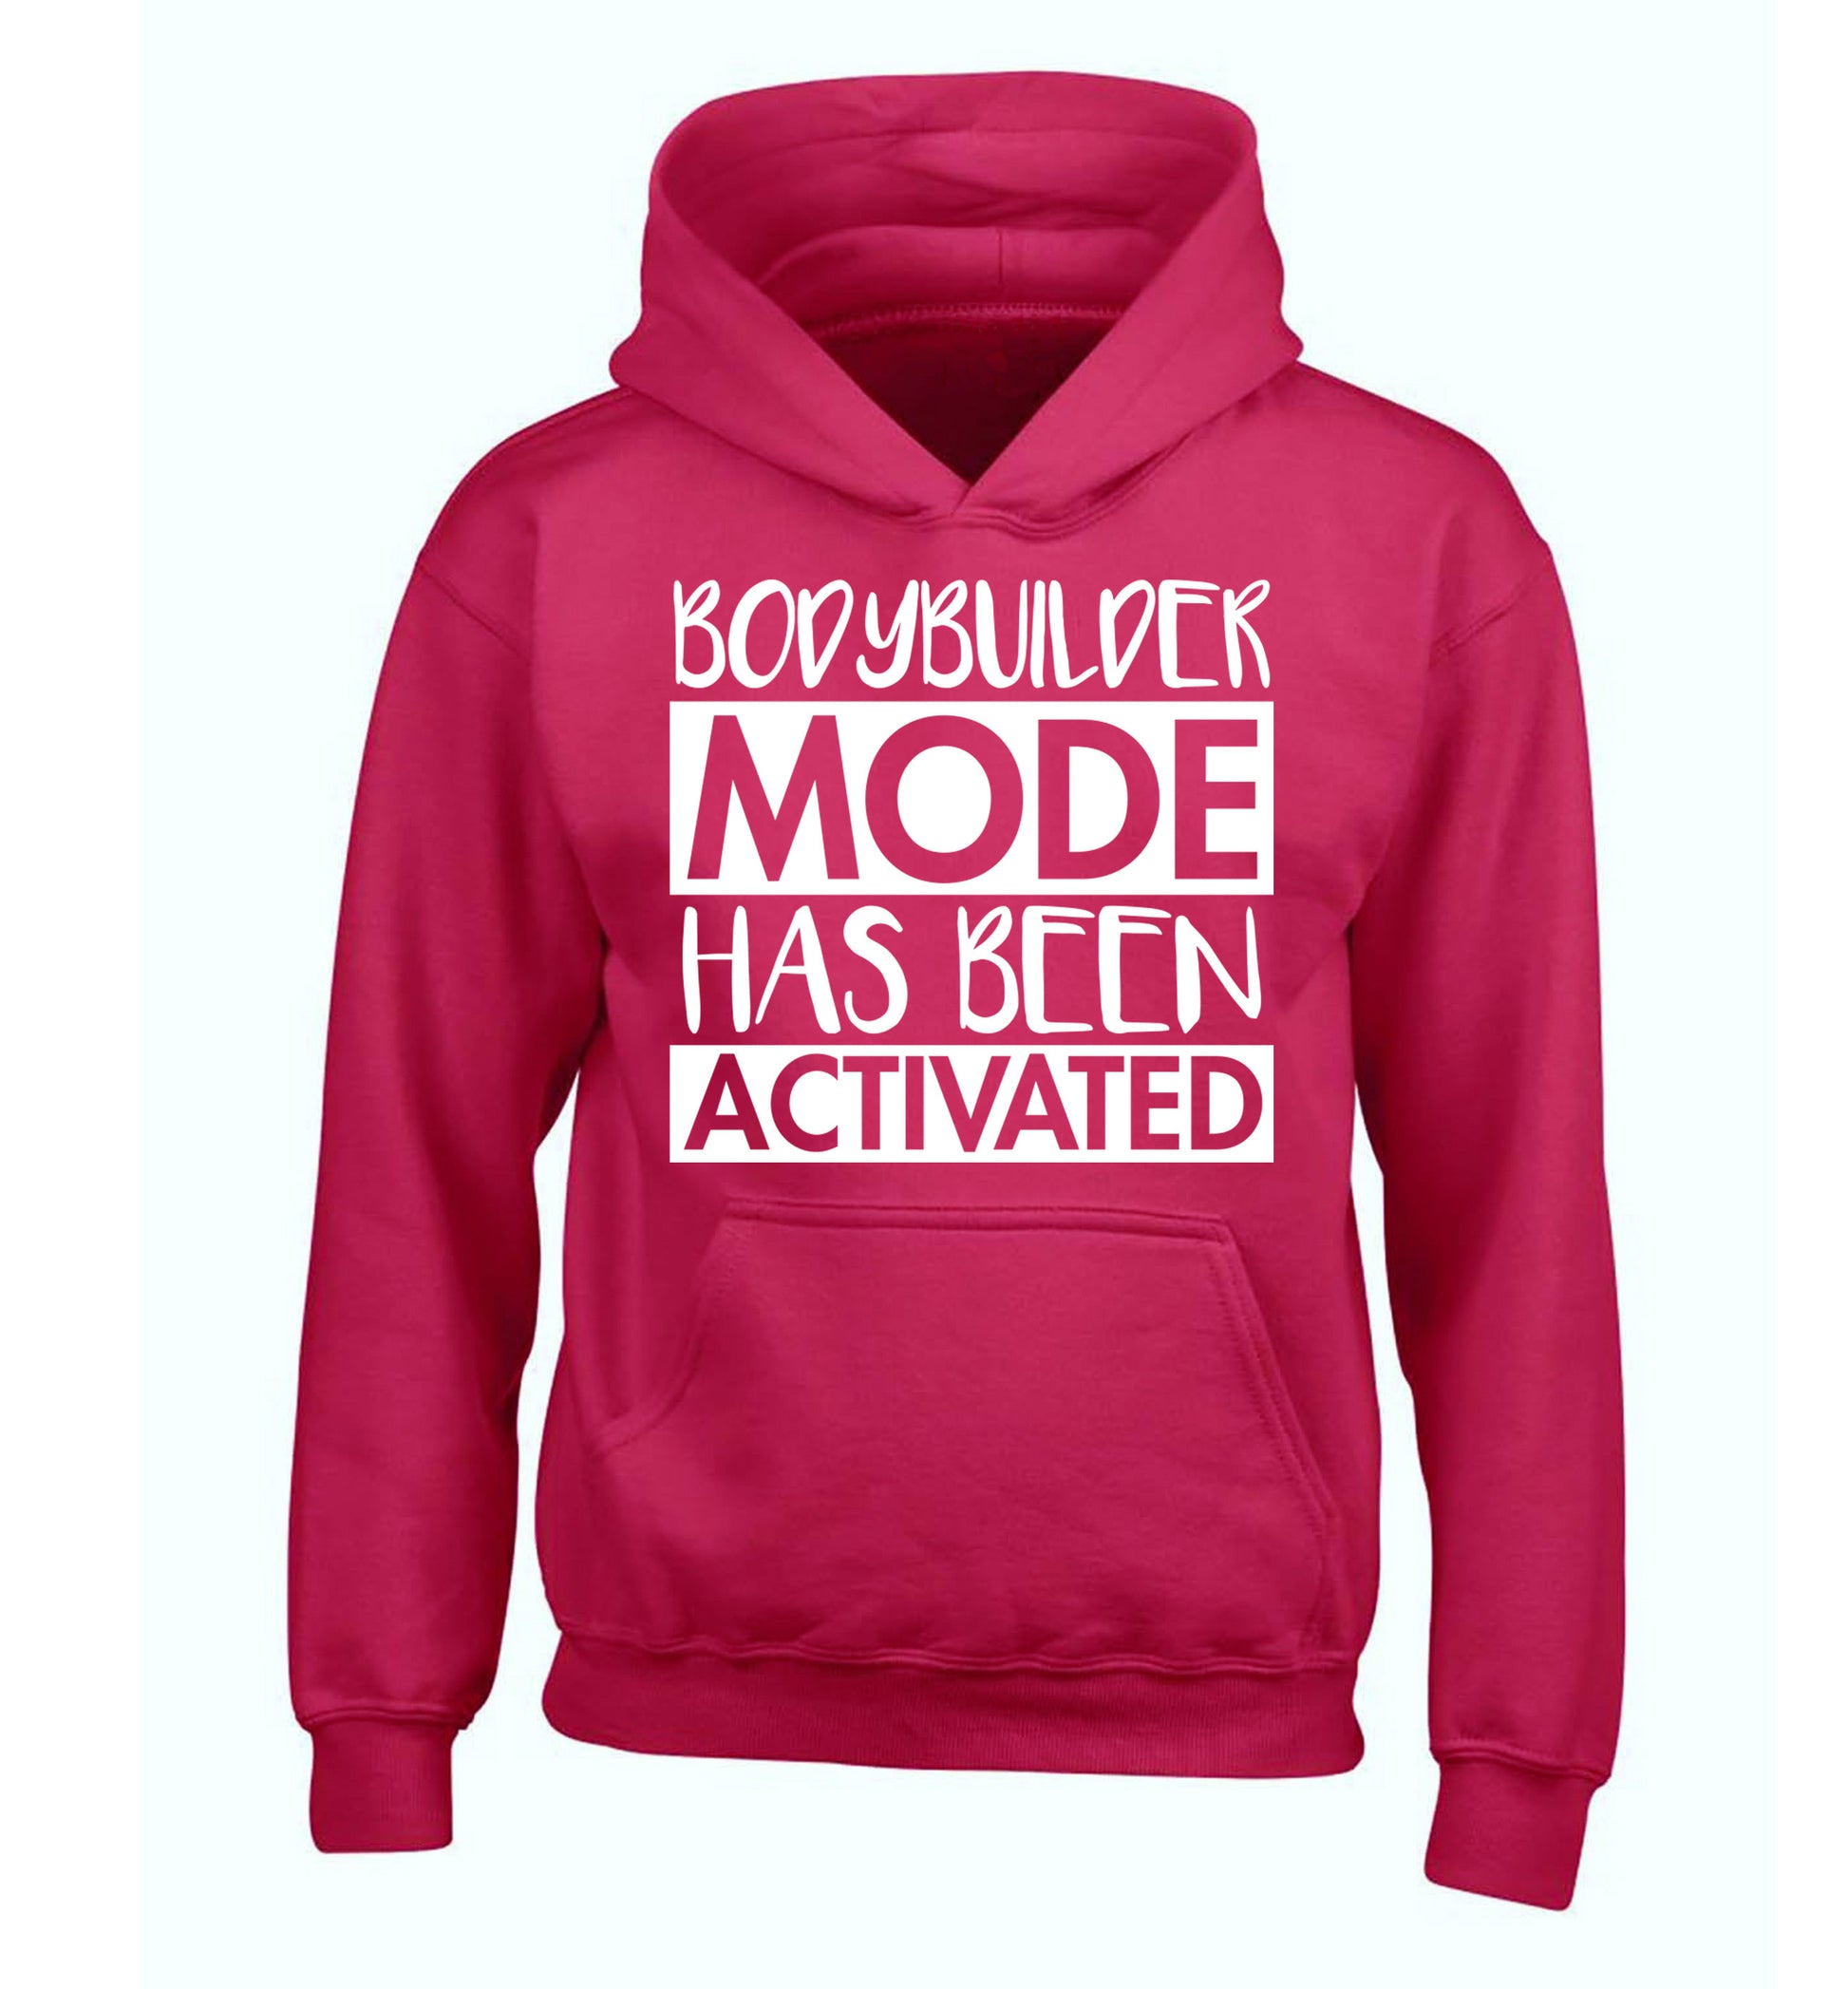 Bodybuilder mode activated children's pink hoodie 12-14 Years